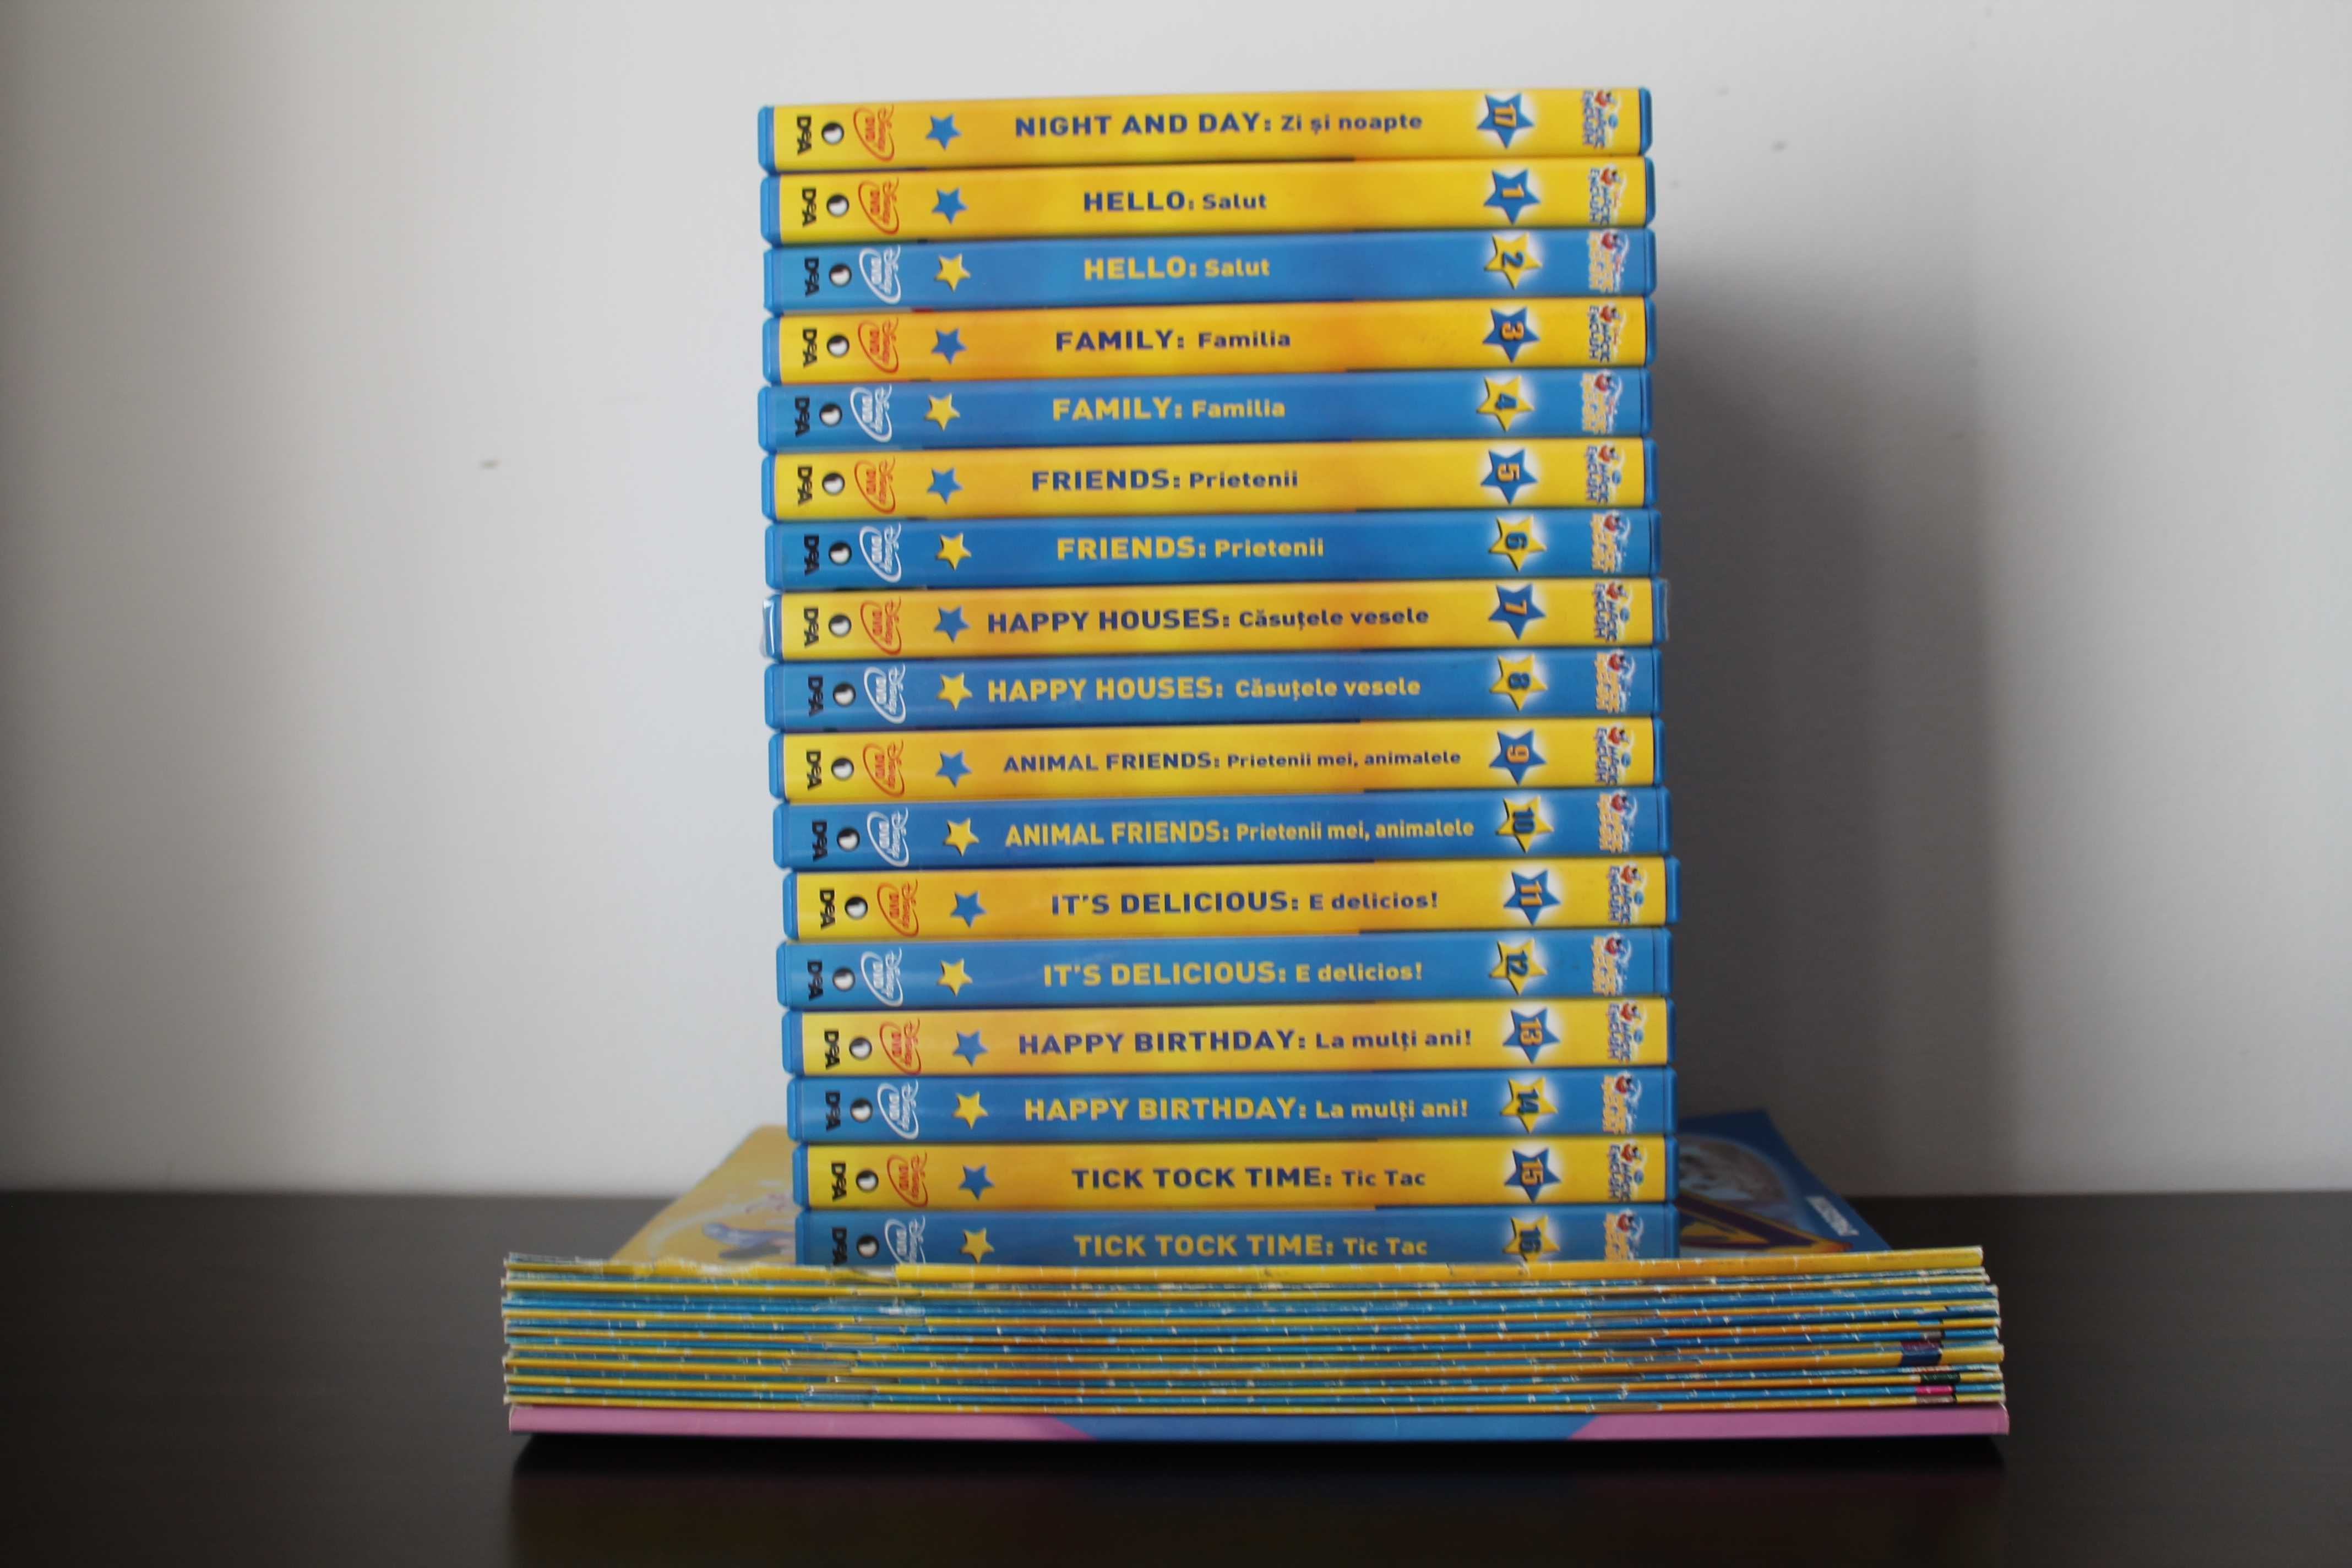 Colecția Disney Magic English (17 DVD-uri) - De AGOSTINI